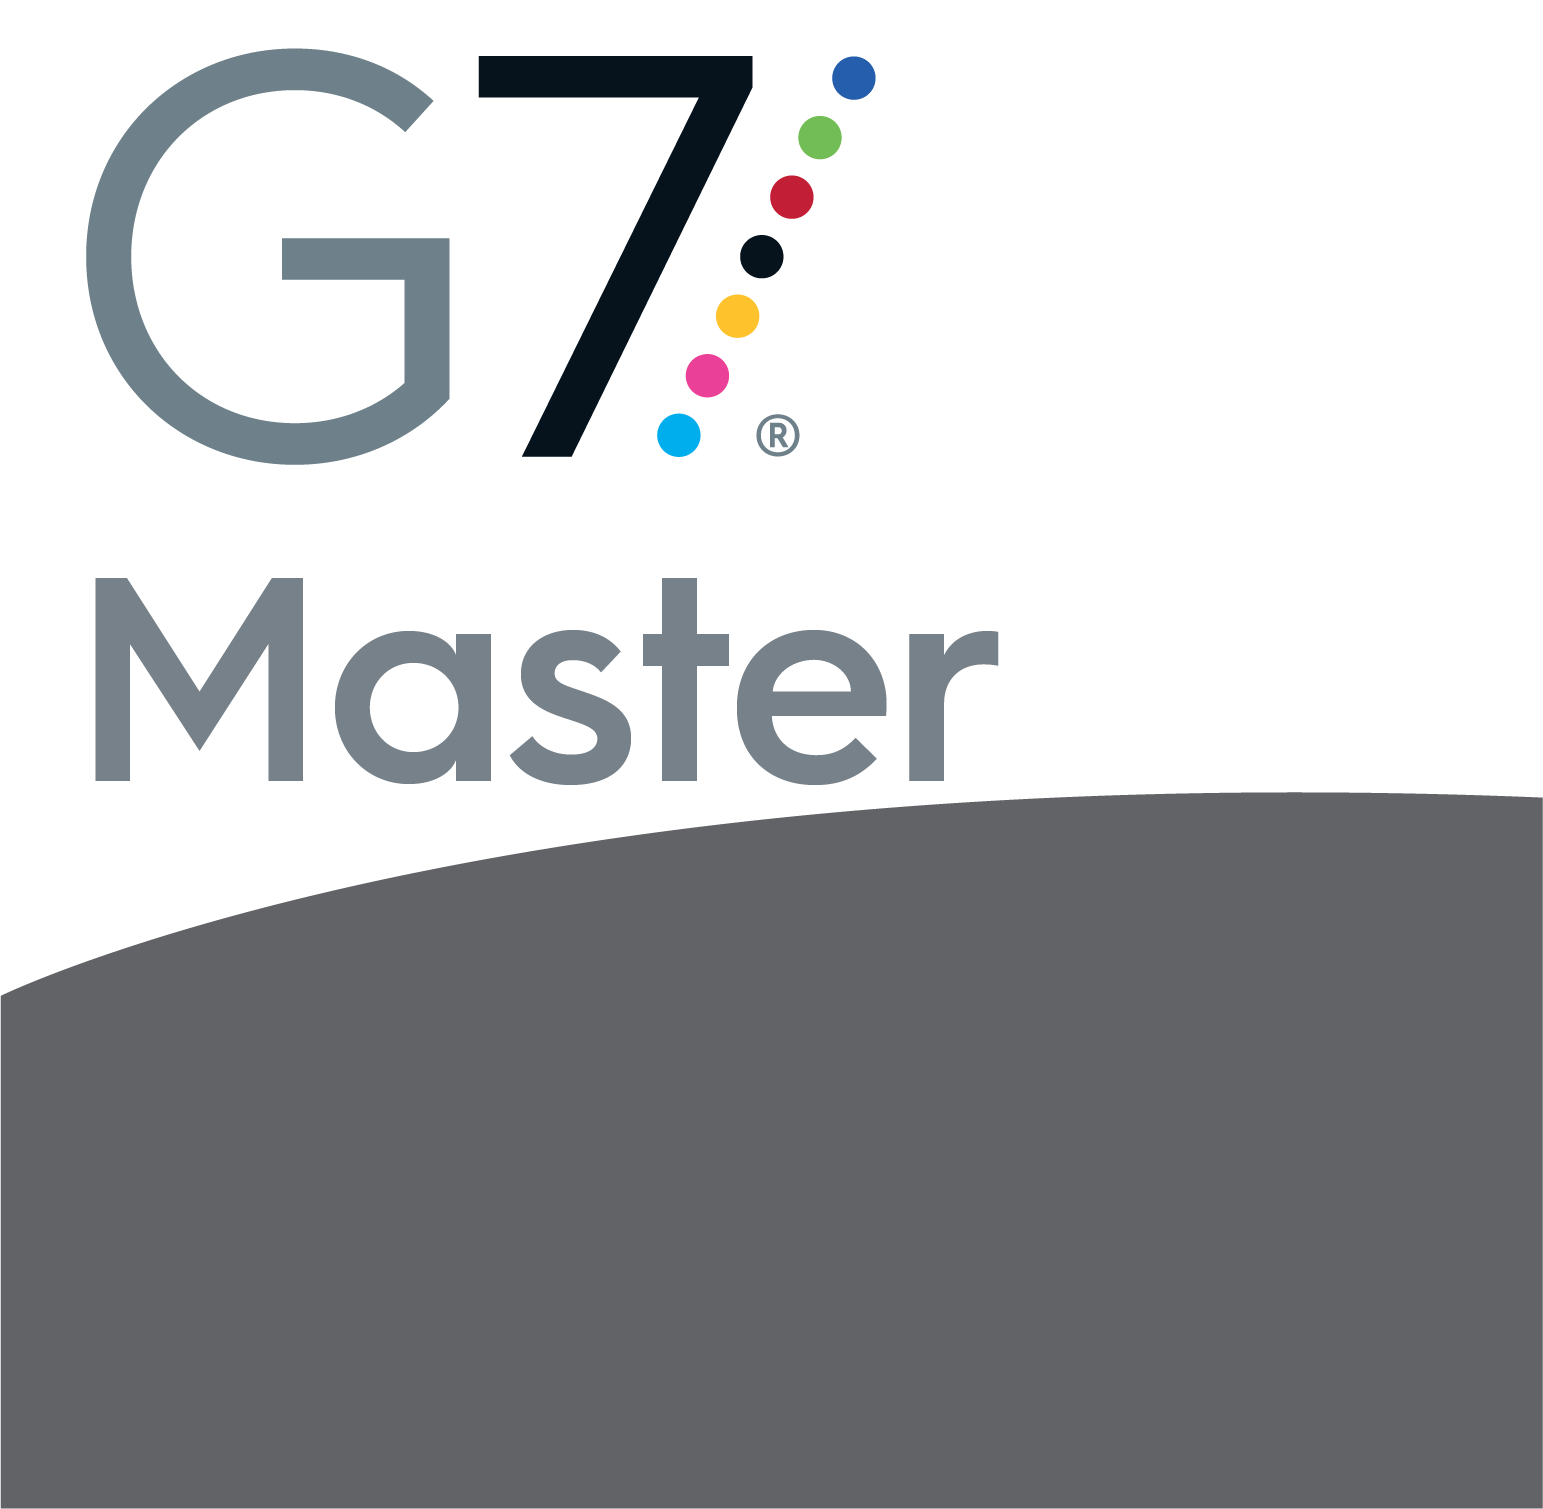 G7 Logo - Home